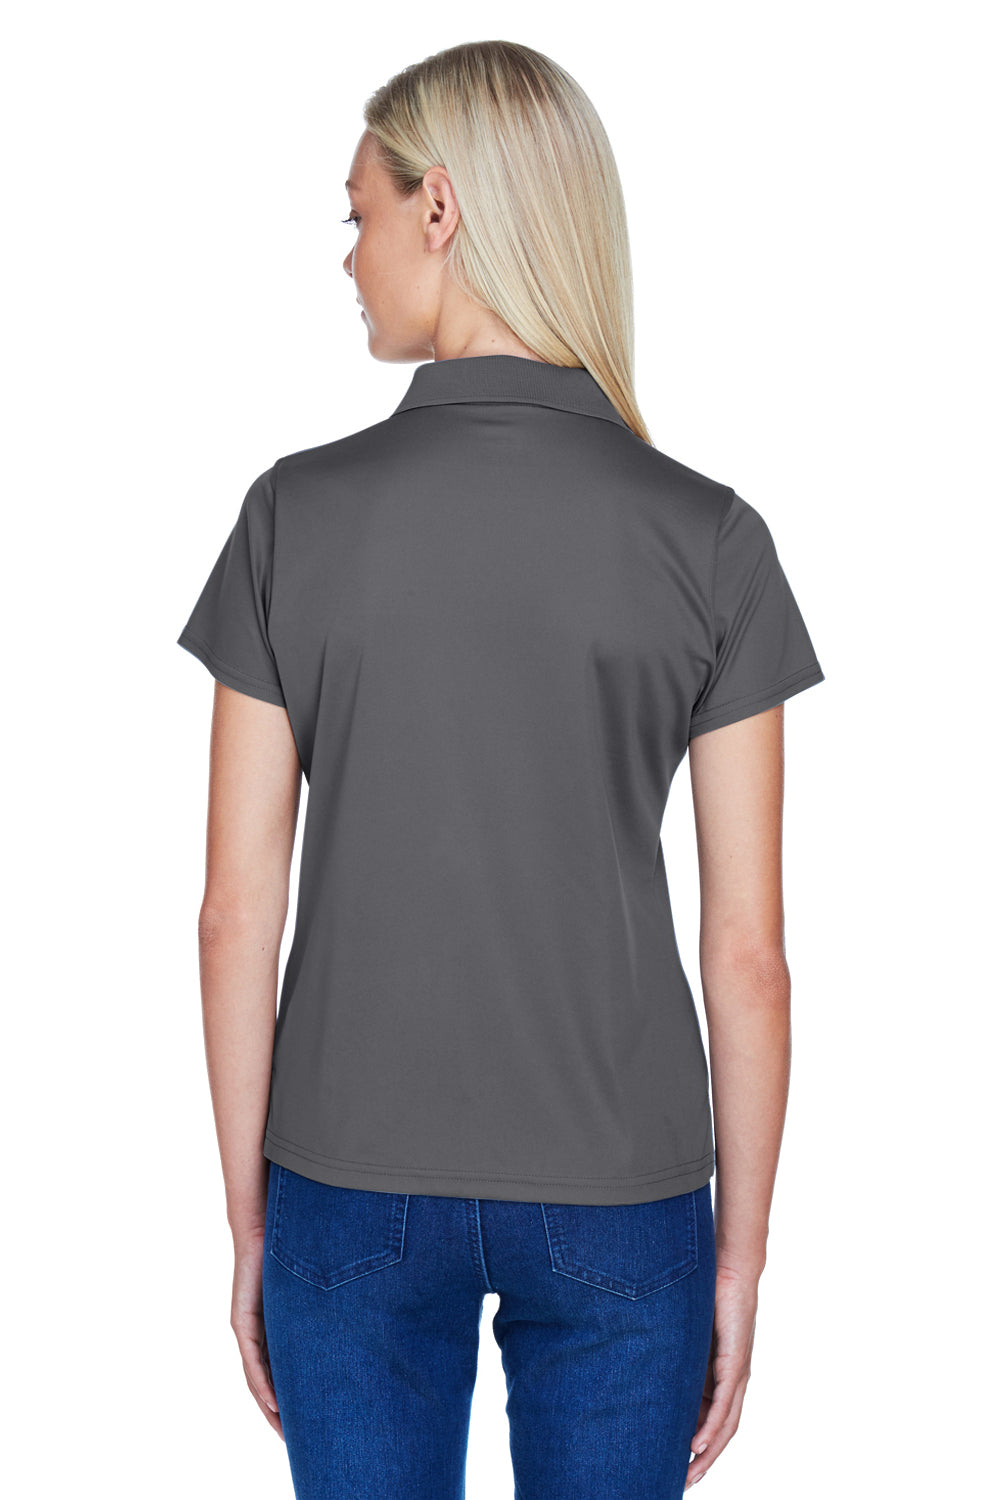 Harriton M315W Womens Polytech Moisture Wicking Short Sleeve Polo Shirt Charcoal Grey Back